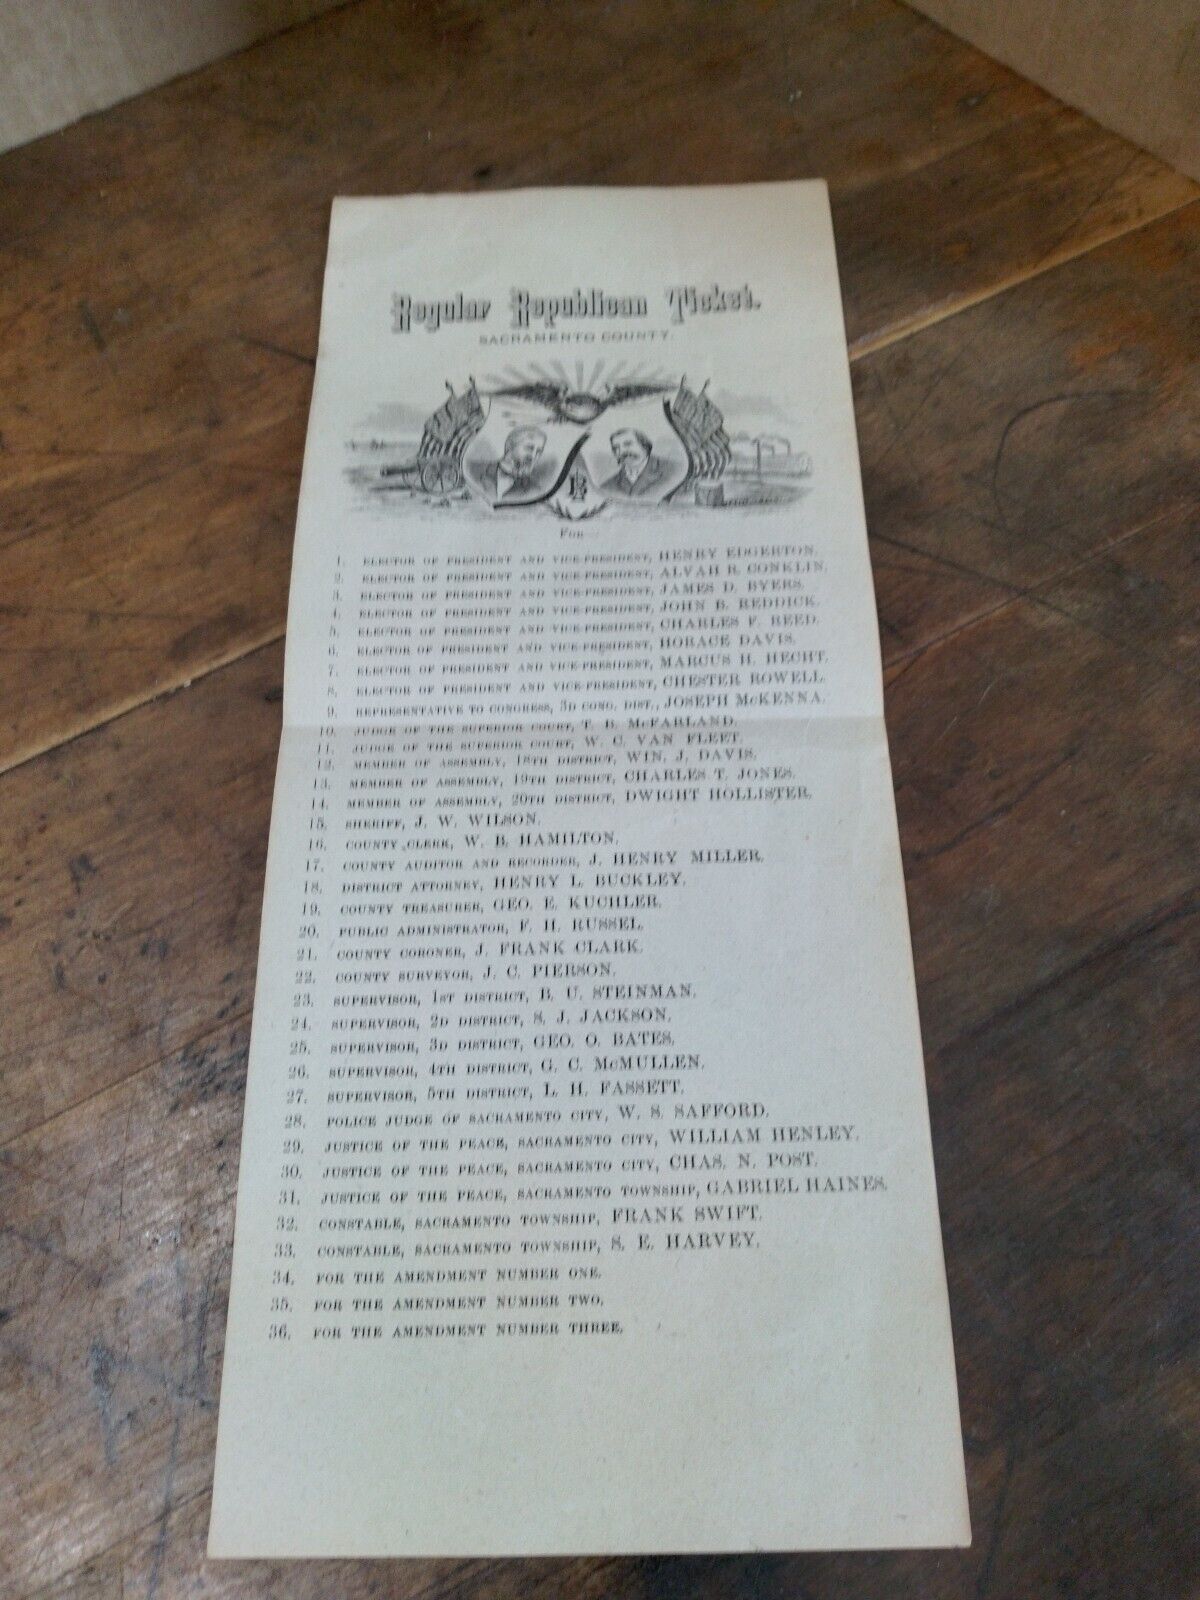 Original Circa 1884 Regular Republican Ticket Blaine &Logan, Sacramento County